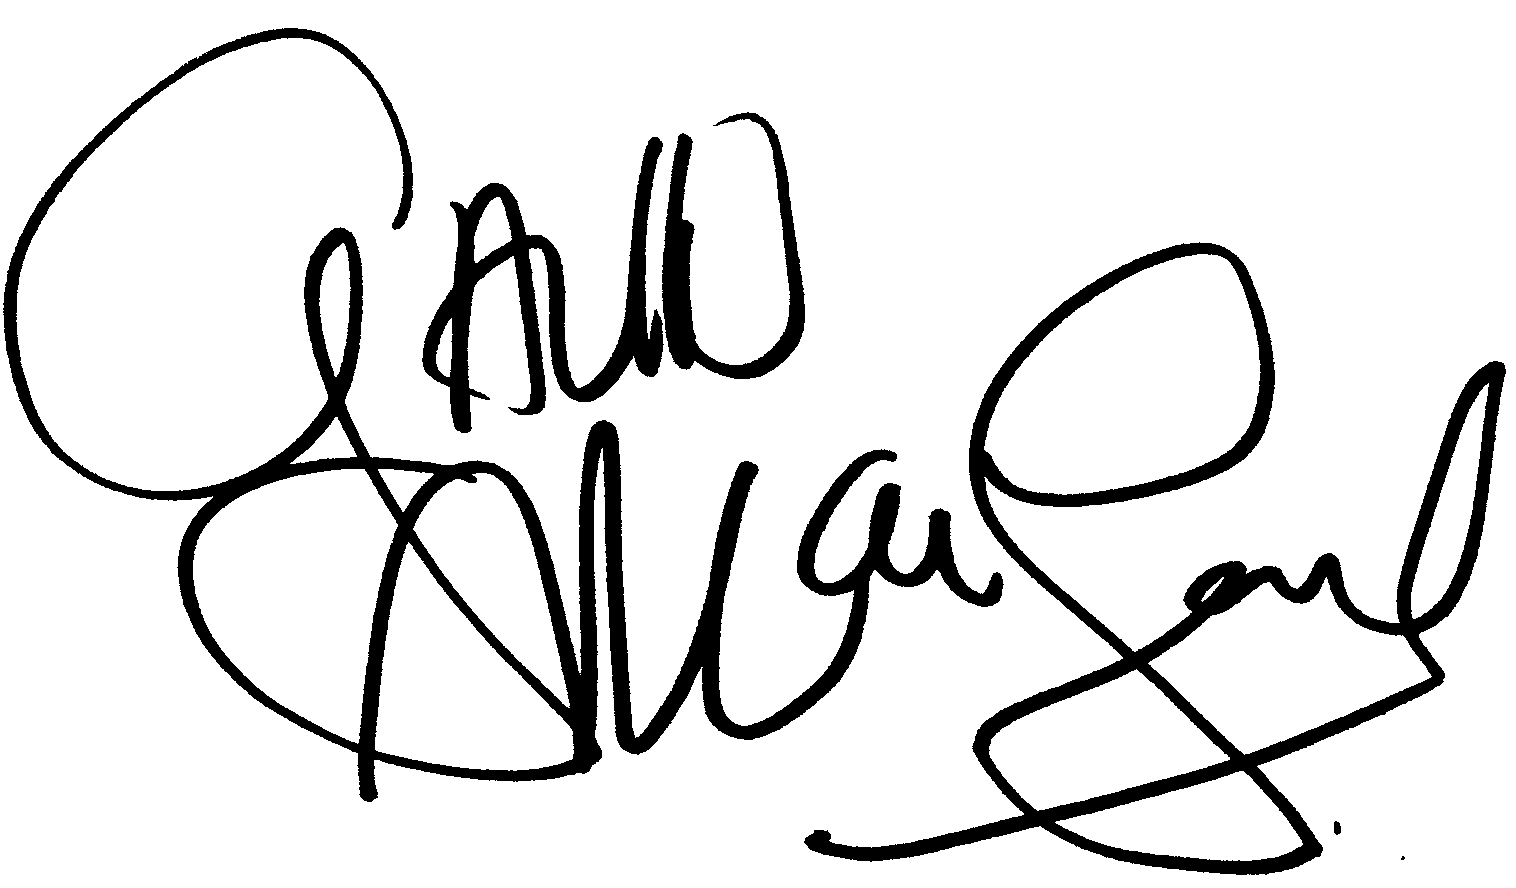 Gavin MacLeod autograph facsimile